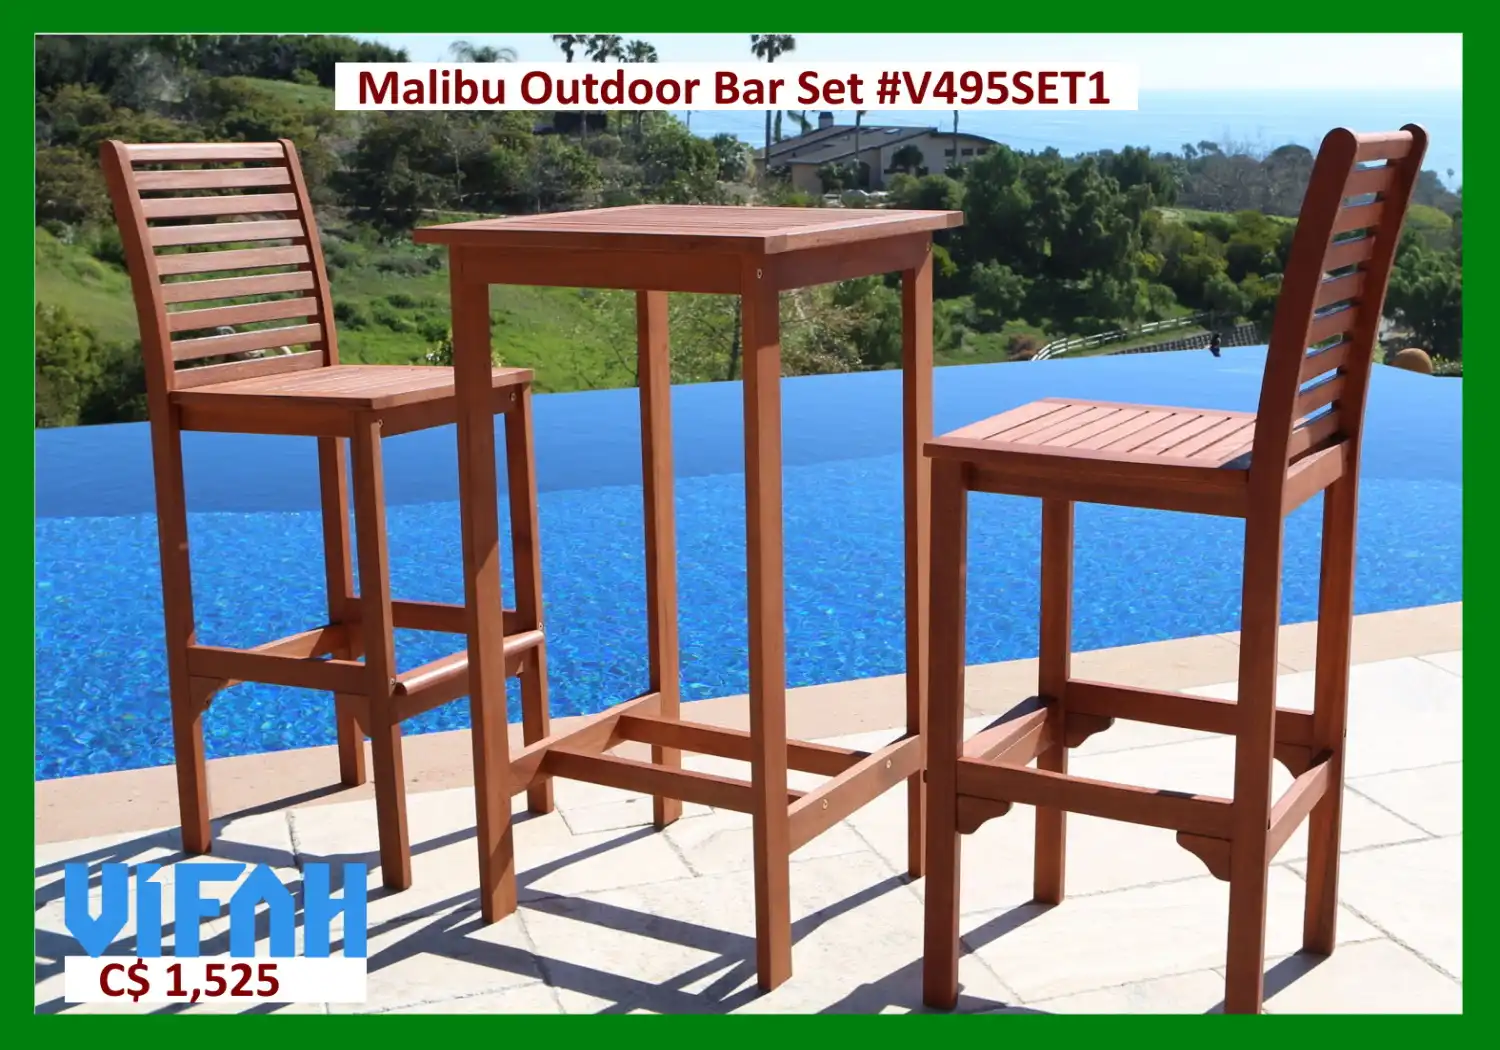 MALIBU Outdoor #V495SET1 Bar Set